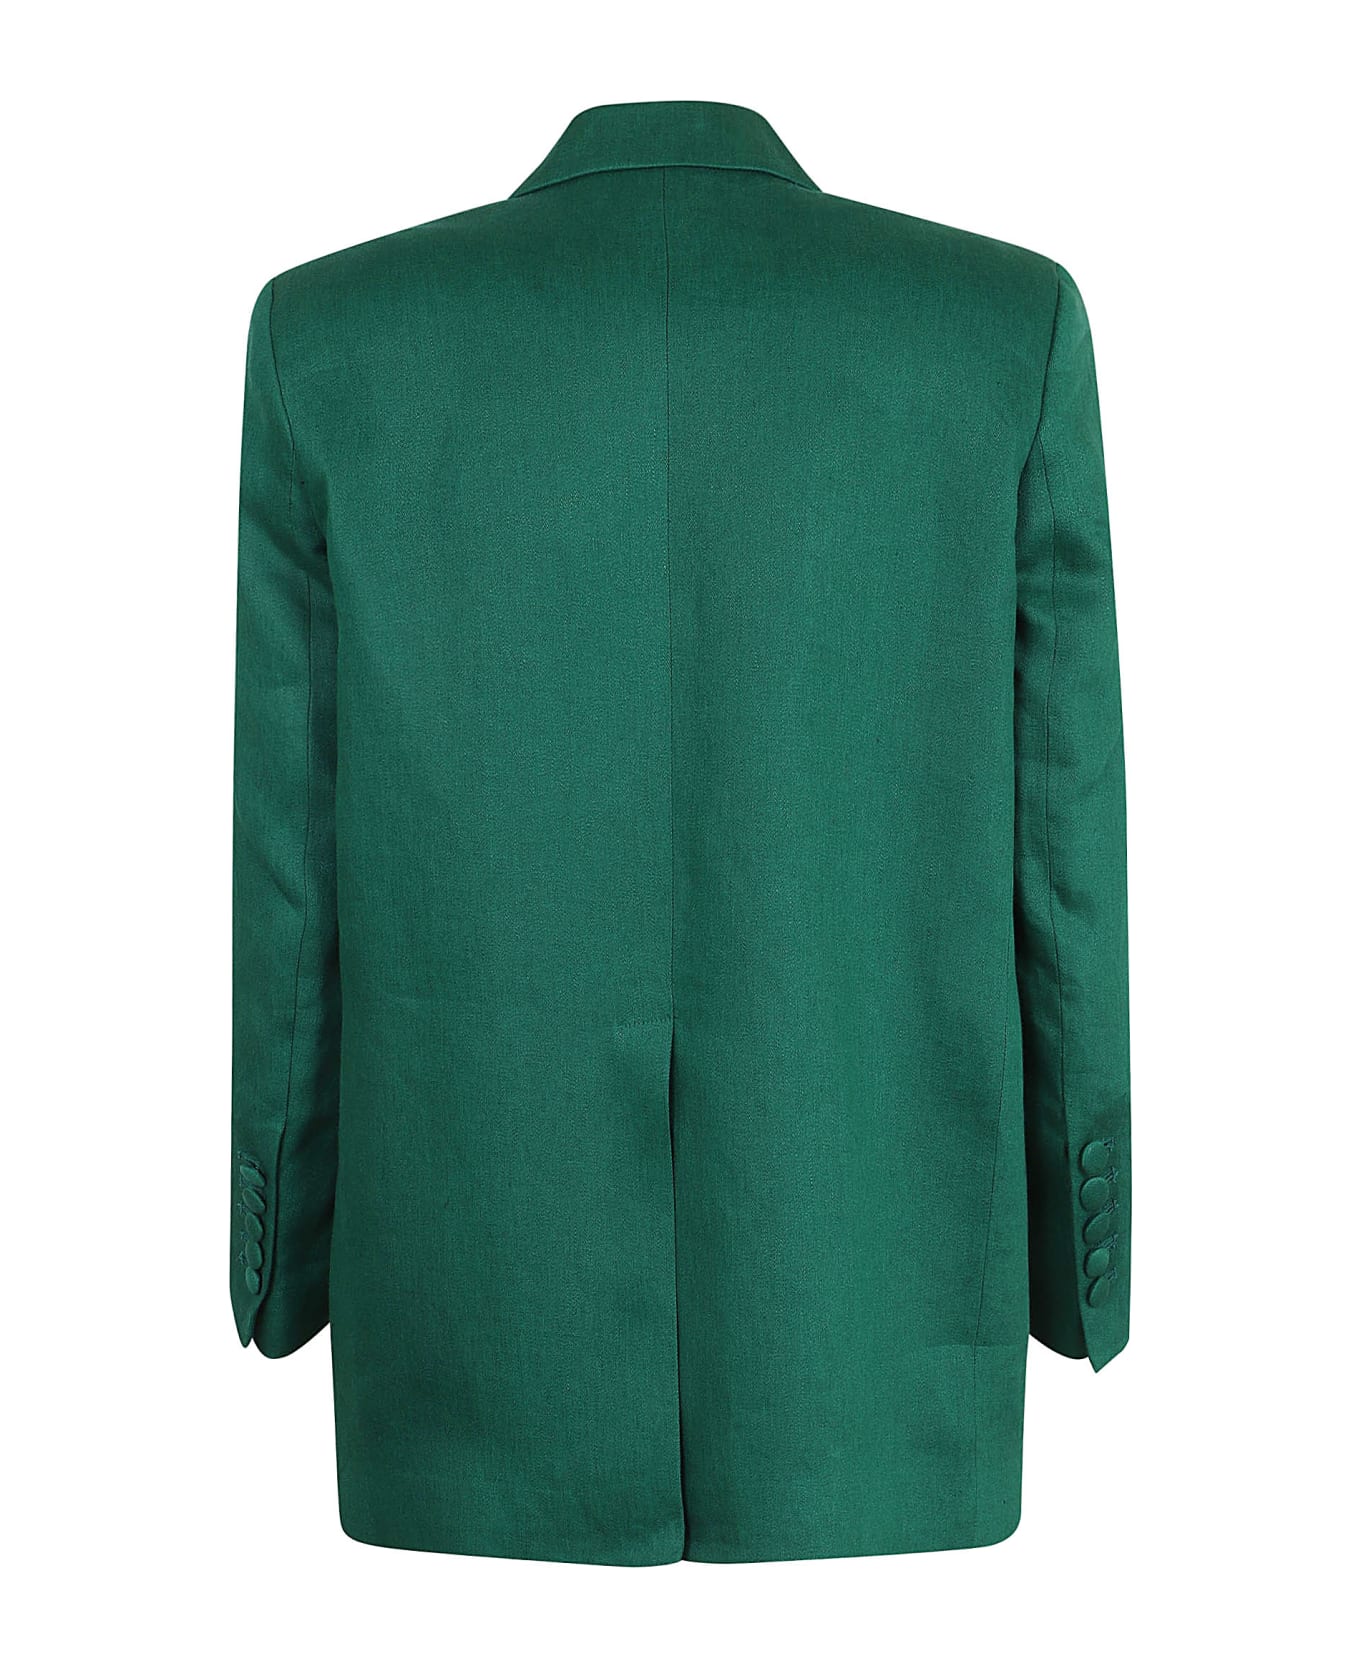 Saulina Milano Woman Jacket - Verde Smeraldo